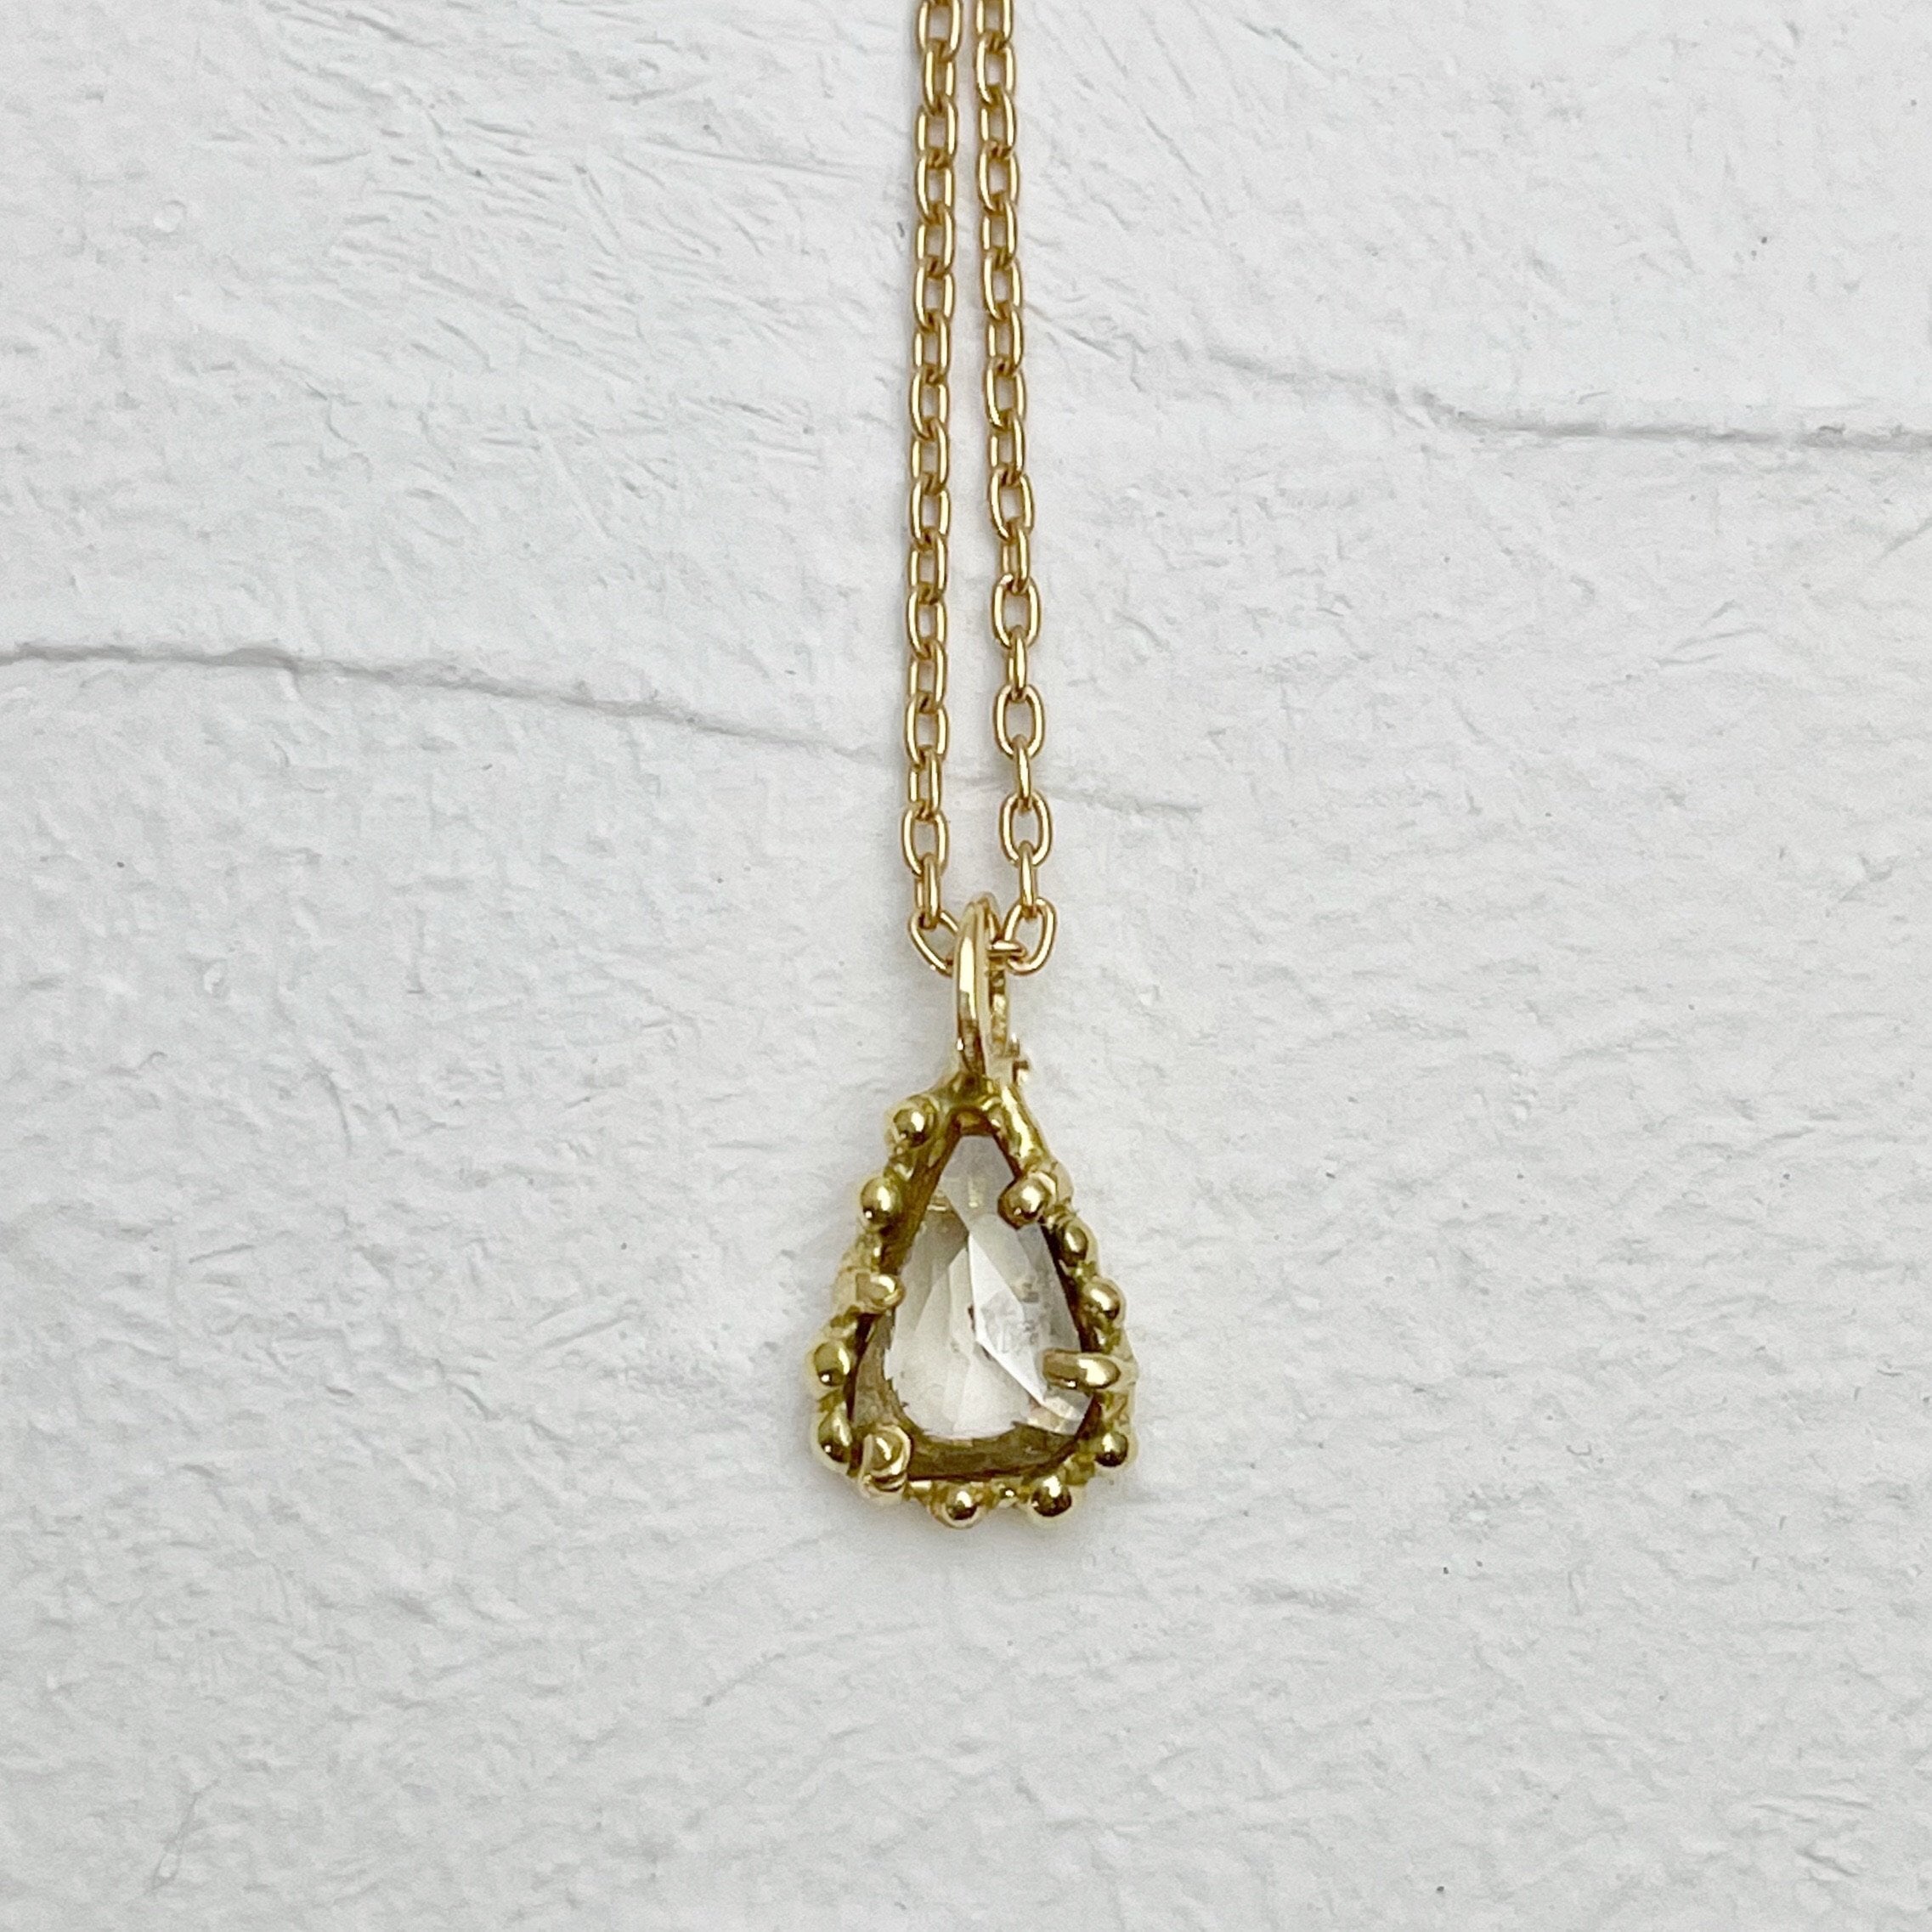 Tint of Brown Triangular Rose Cut Diamond Necklace (18k)